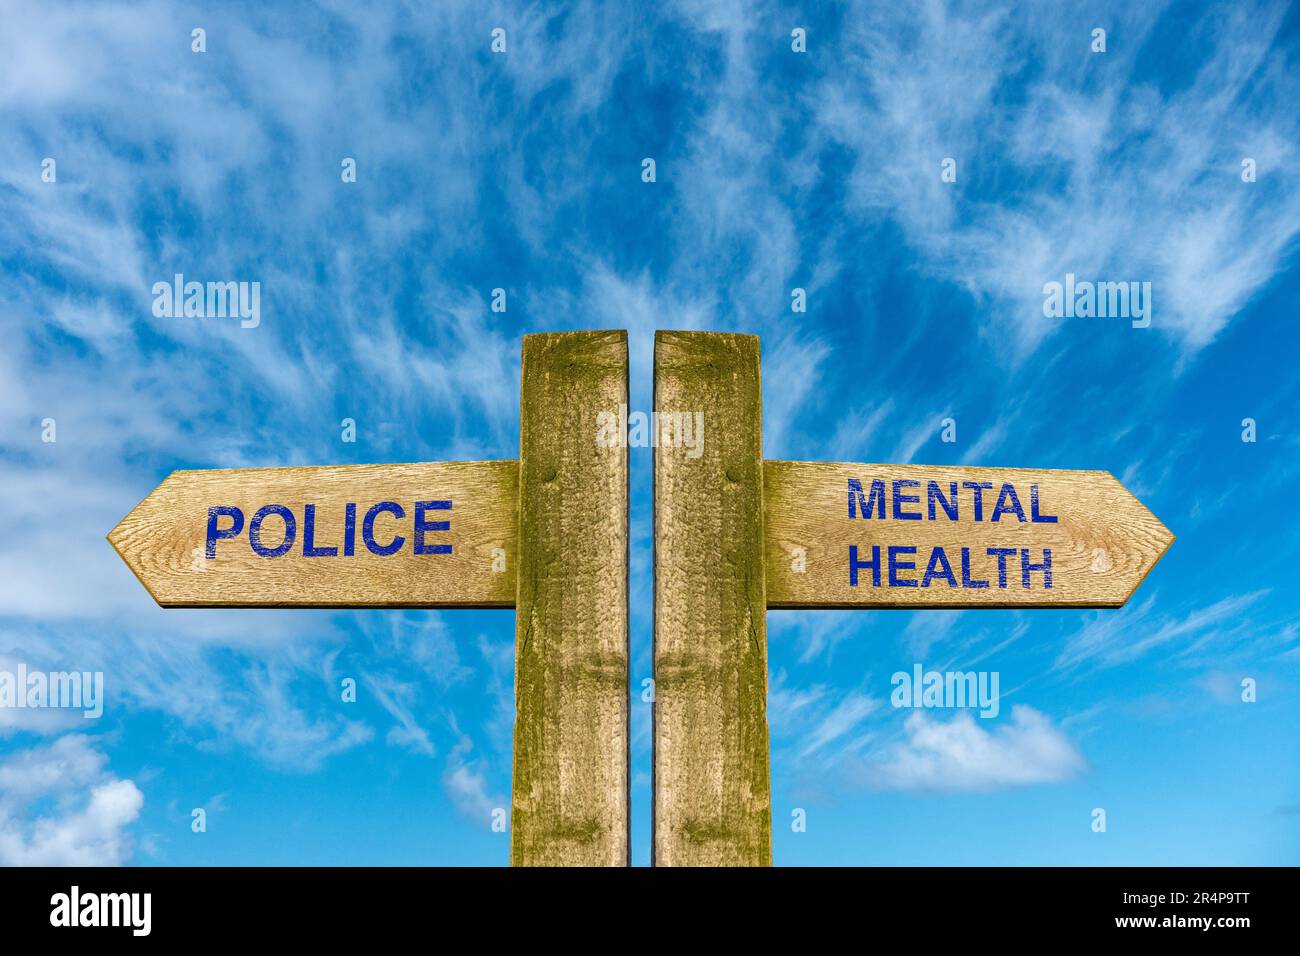 Police, Met Police, Mental health emergency response UK concept Stock Photo